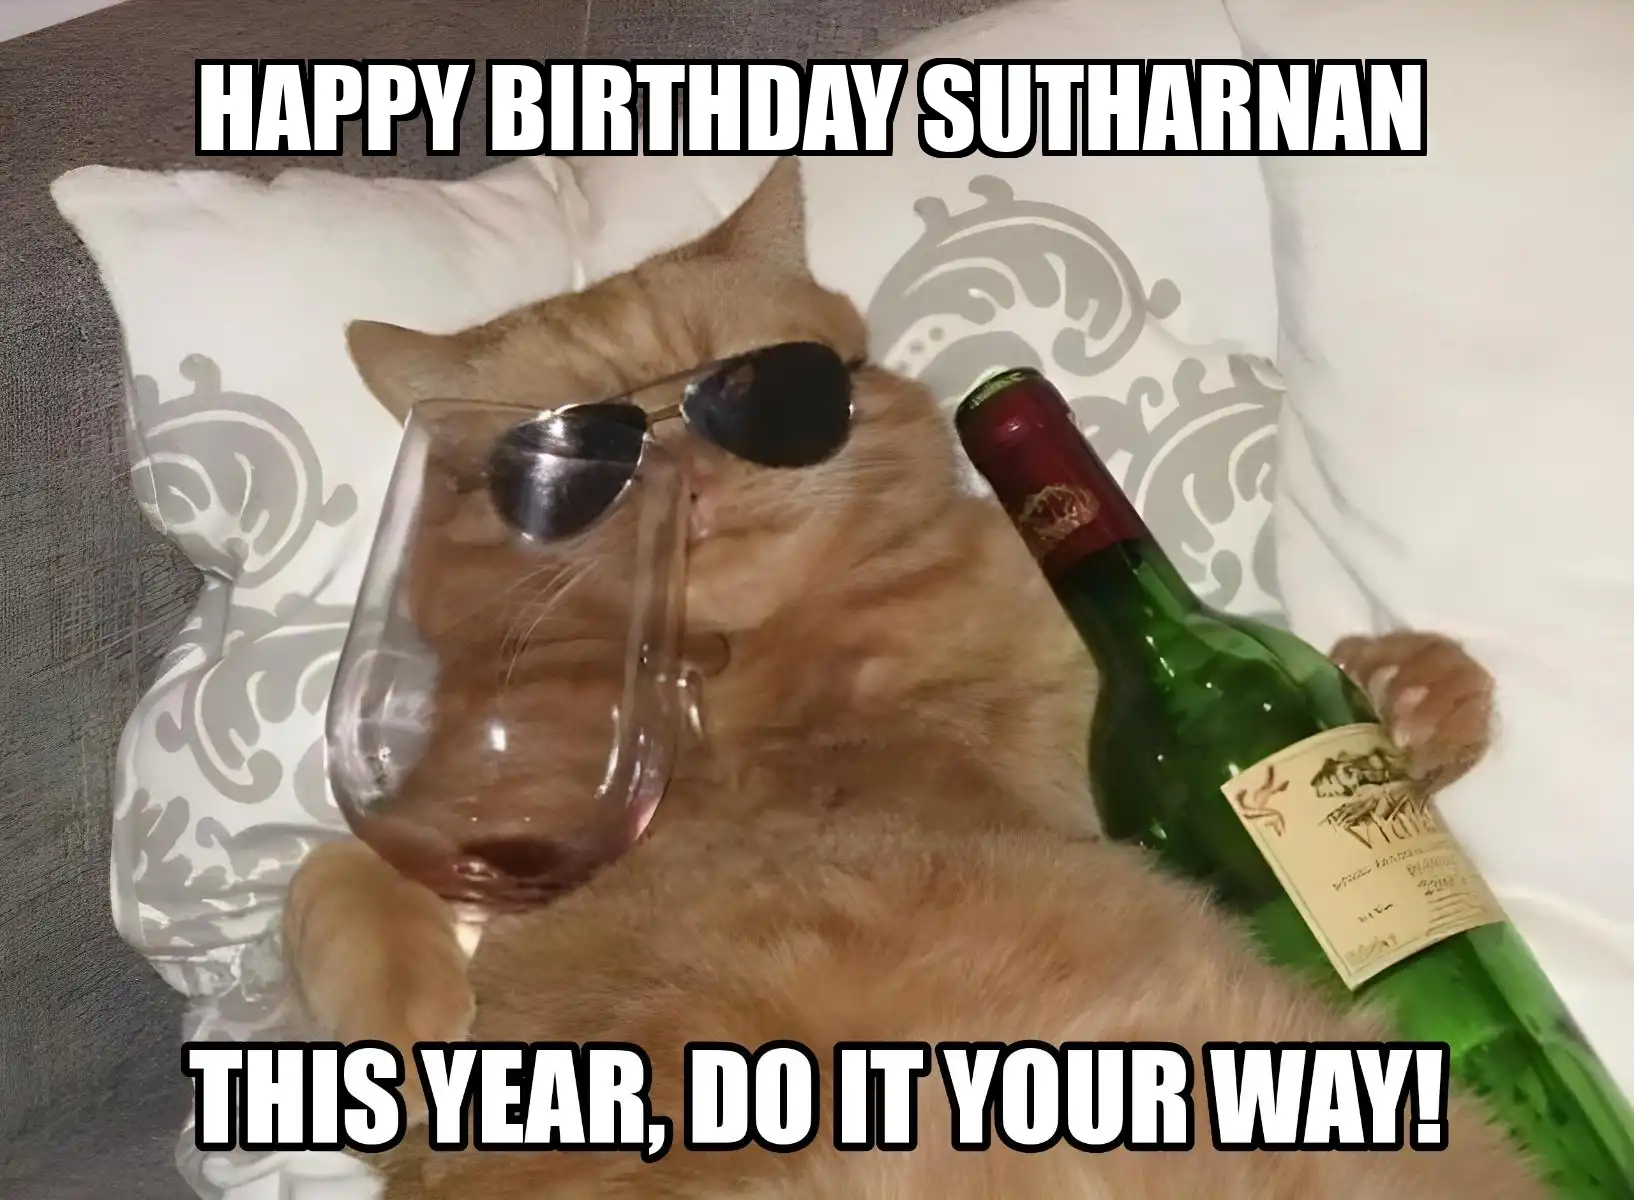 Happy Birthday Sutharnan This Year Do It Your Way Meme